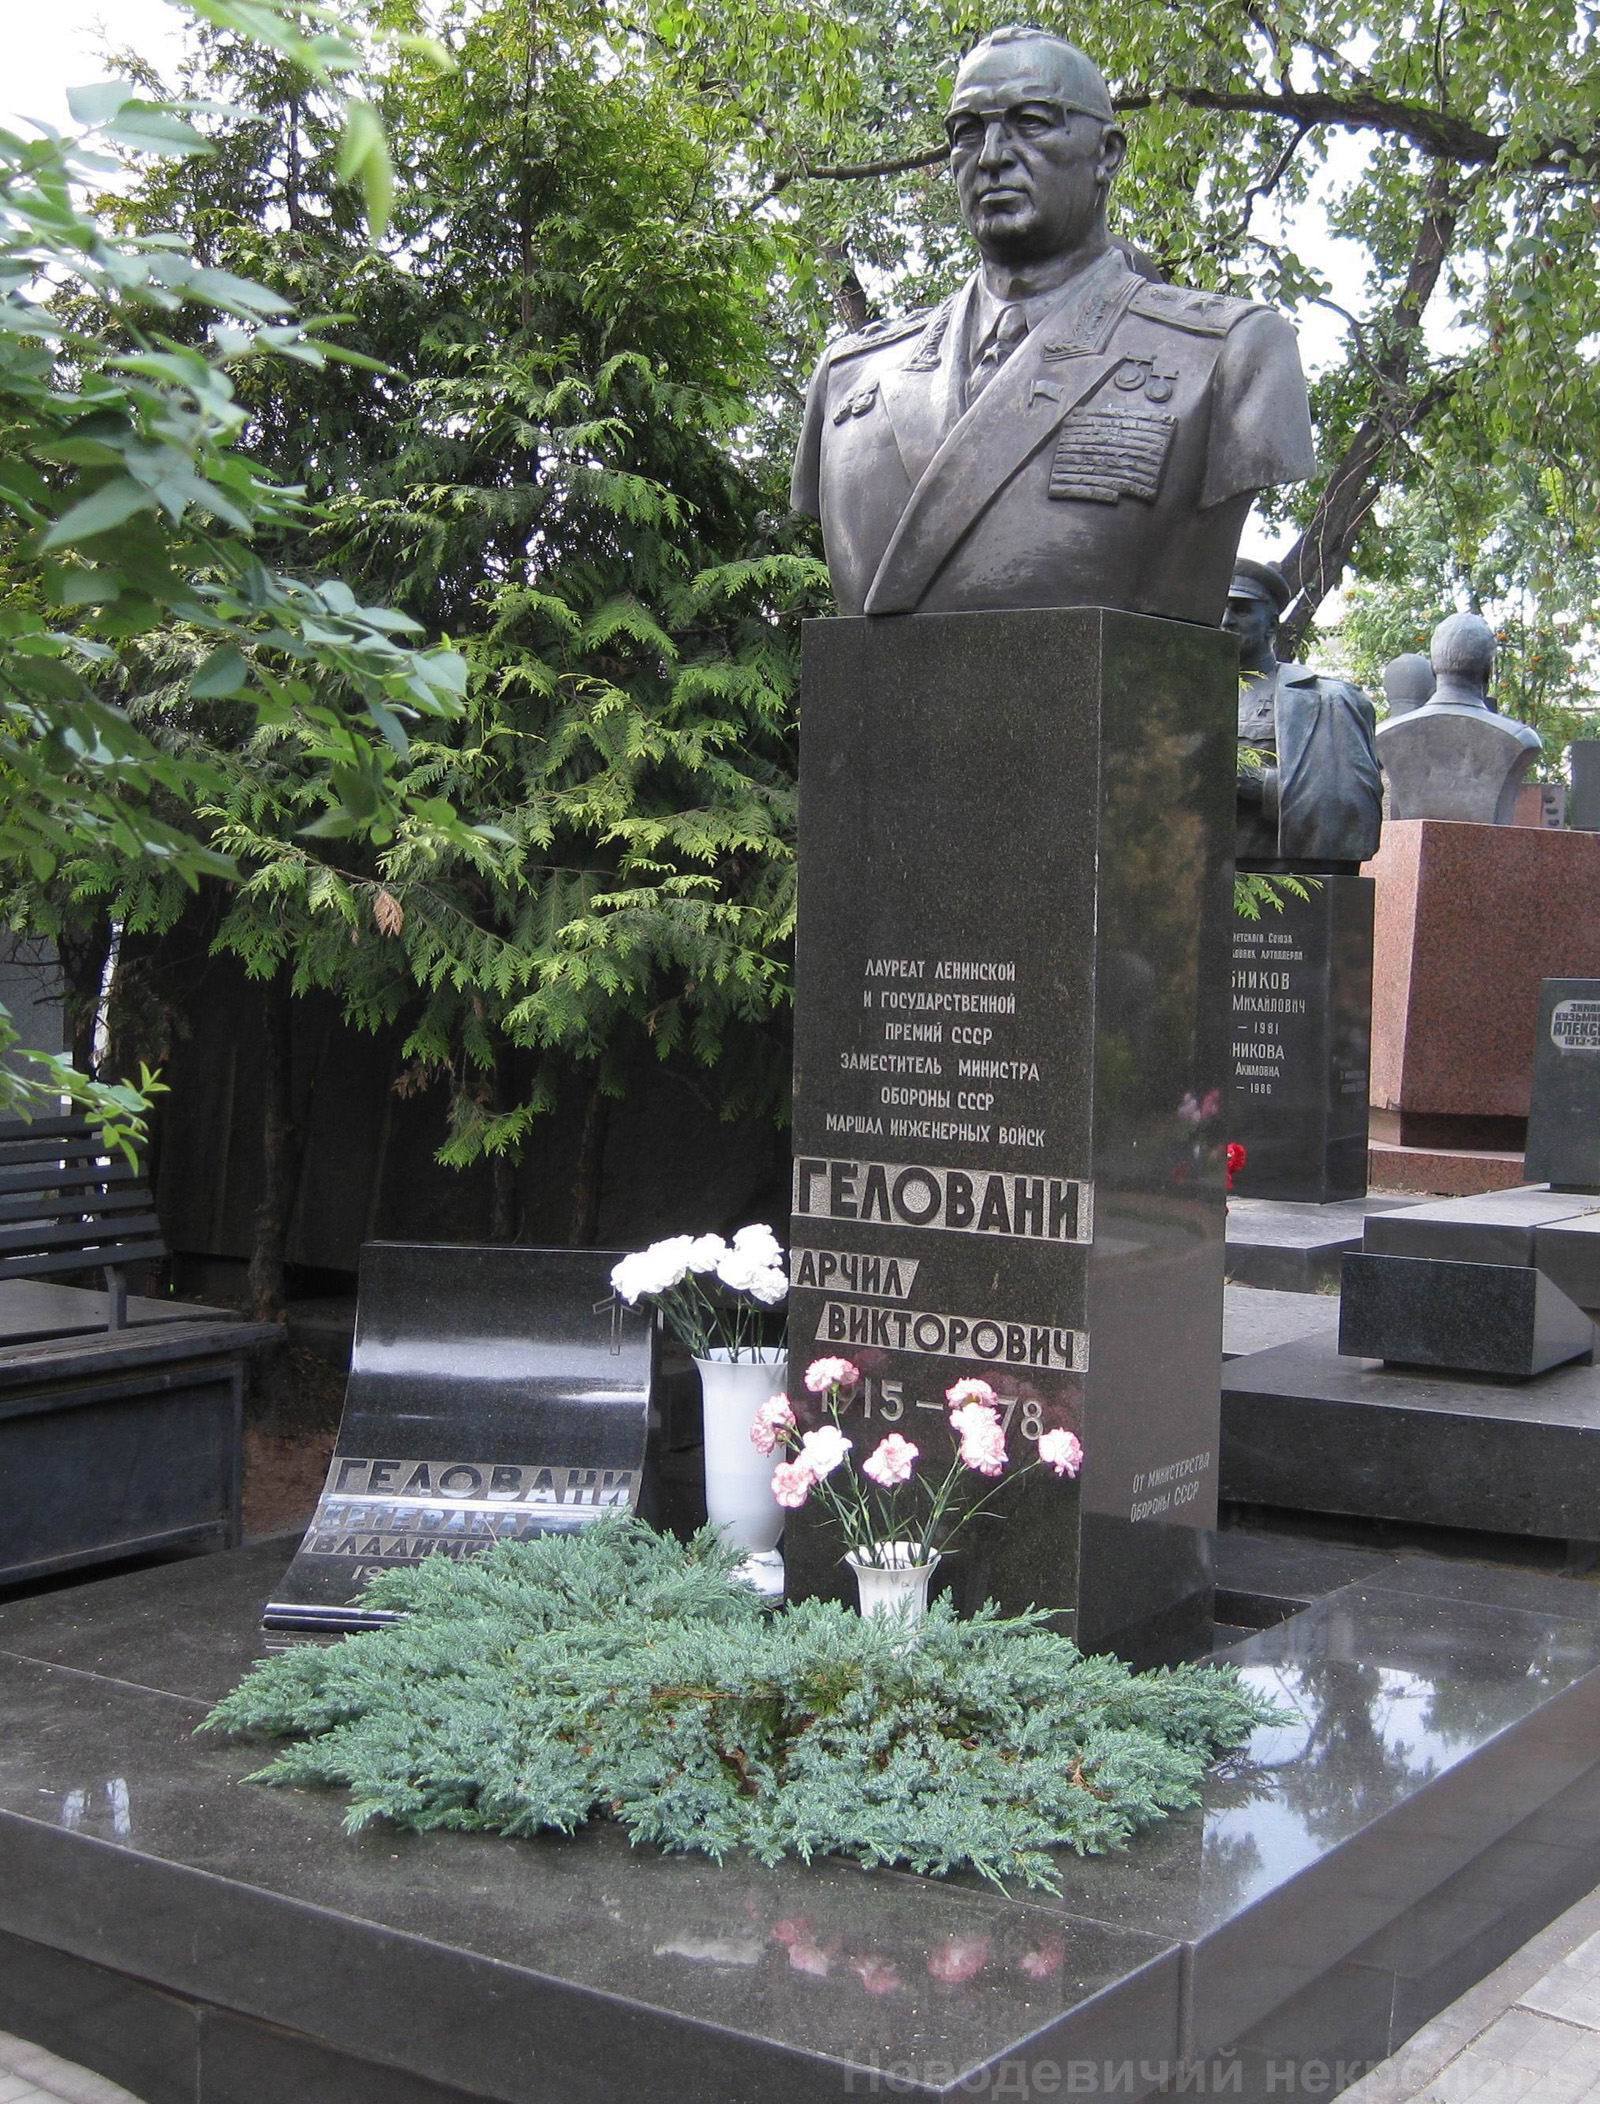 Памятник на могиле Геловани А.В. (1915-1978), ск. О.Парулава, арх. Г.Чичуа, Т.Милешина, на Новодевичьем кладбище (7-15-12).